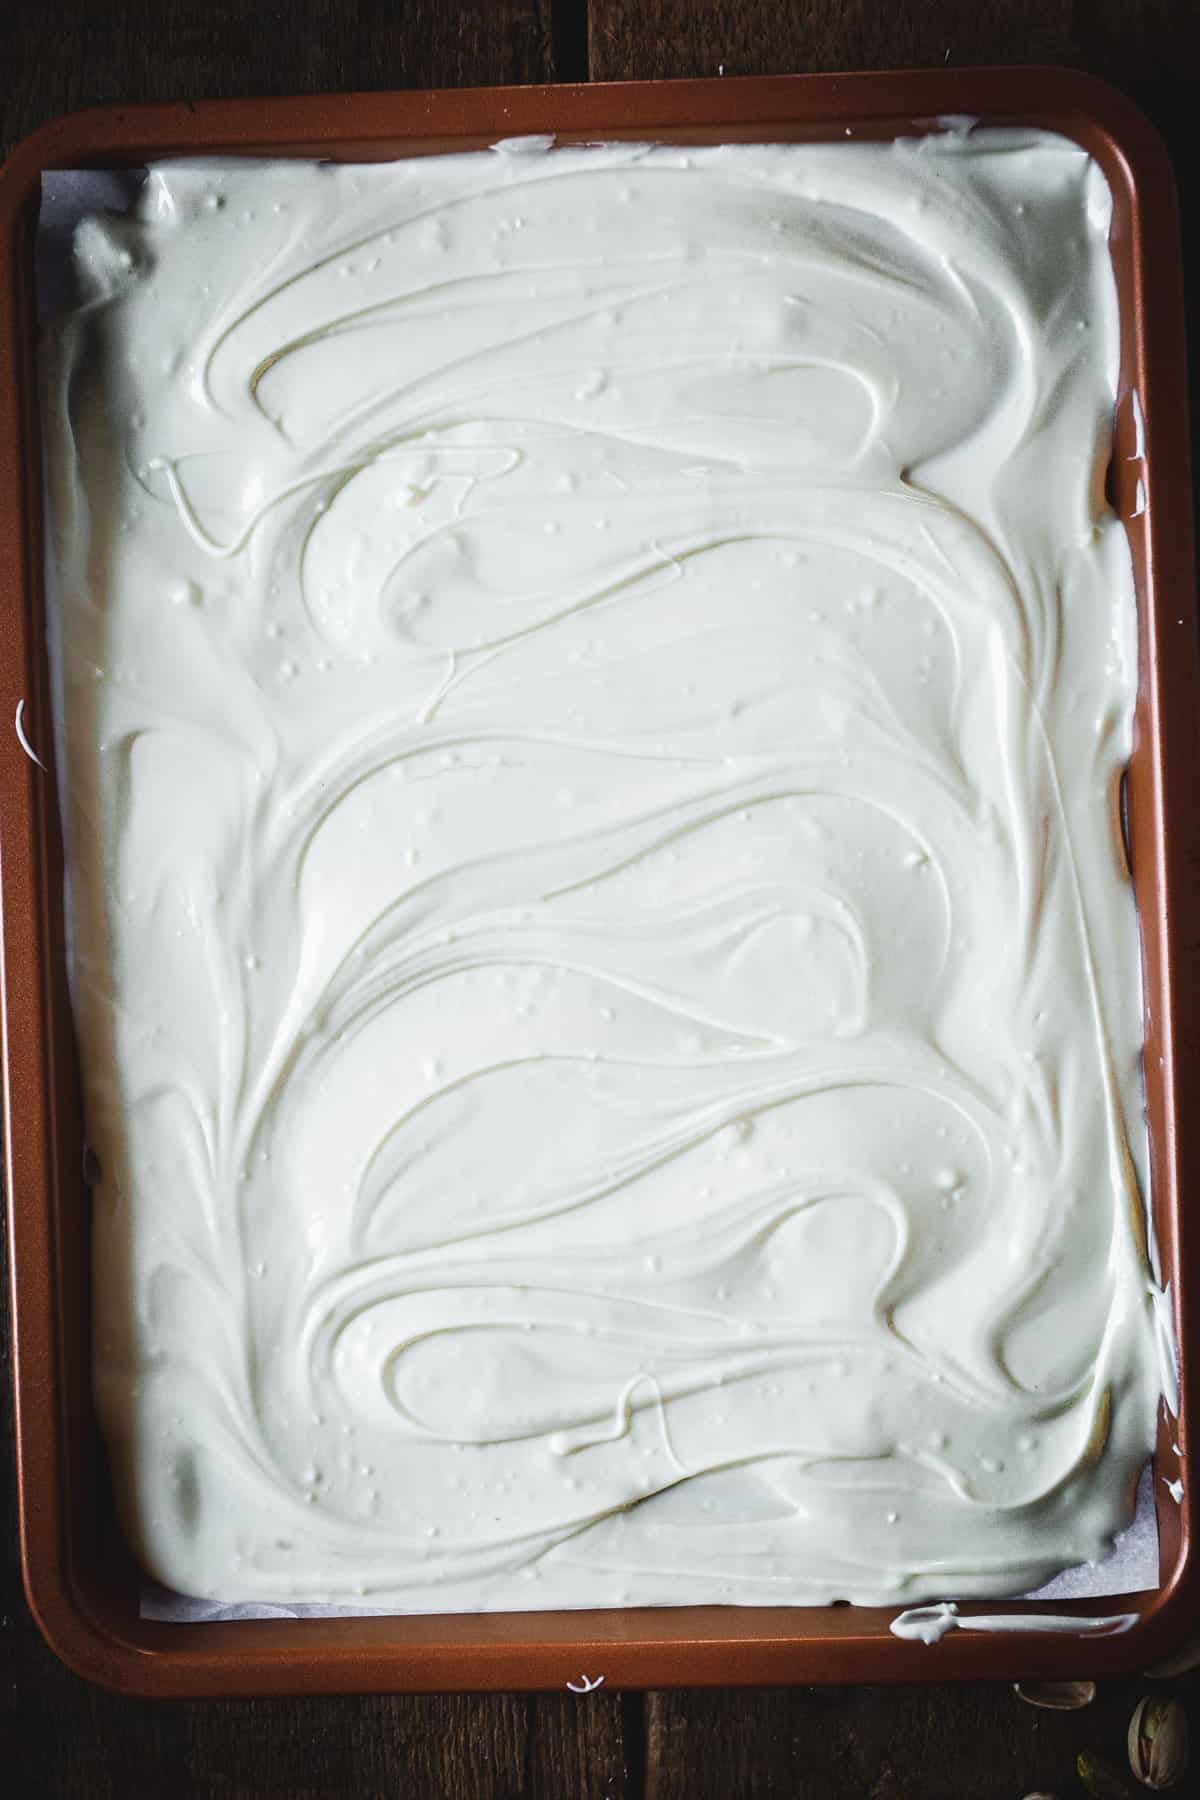 white chocolate spread across baking sheet